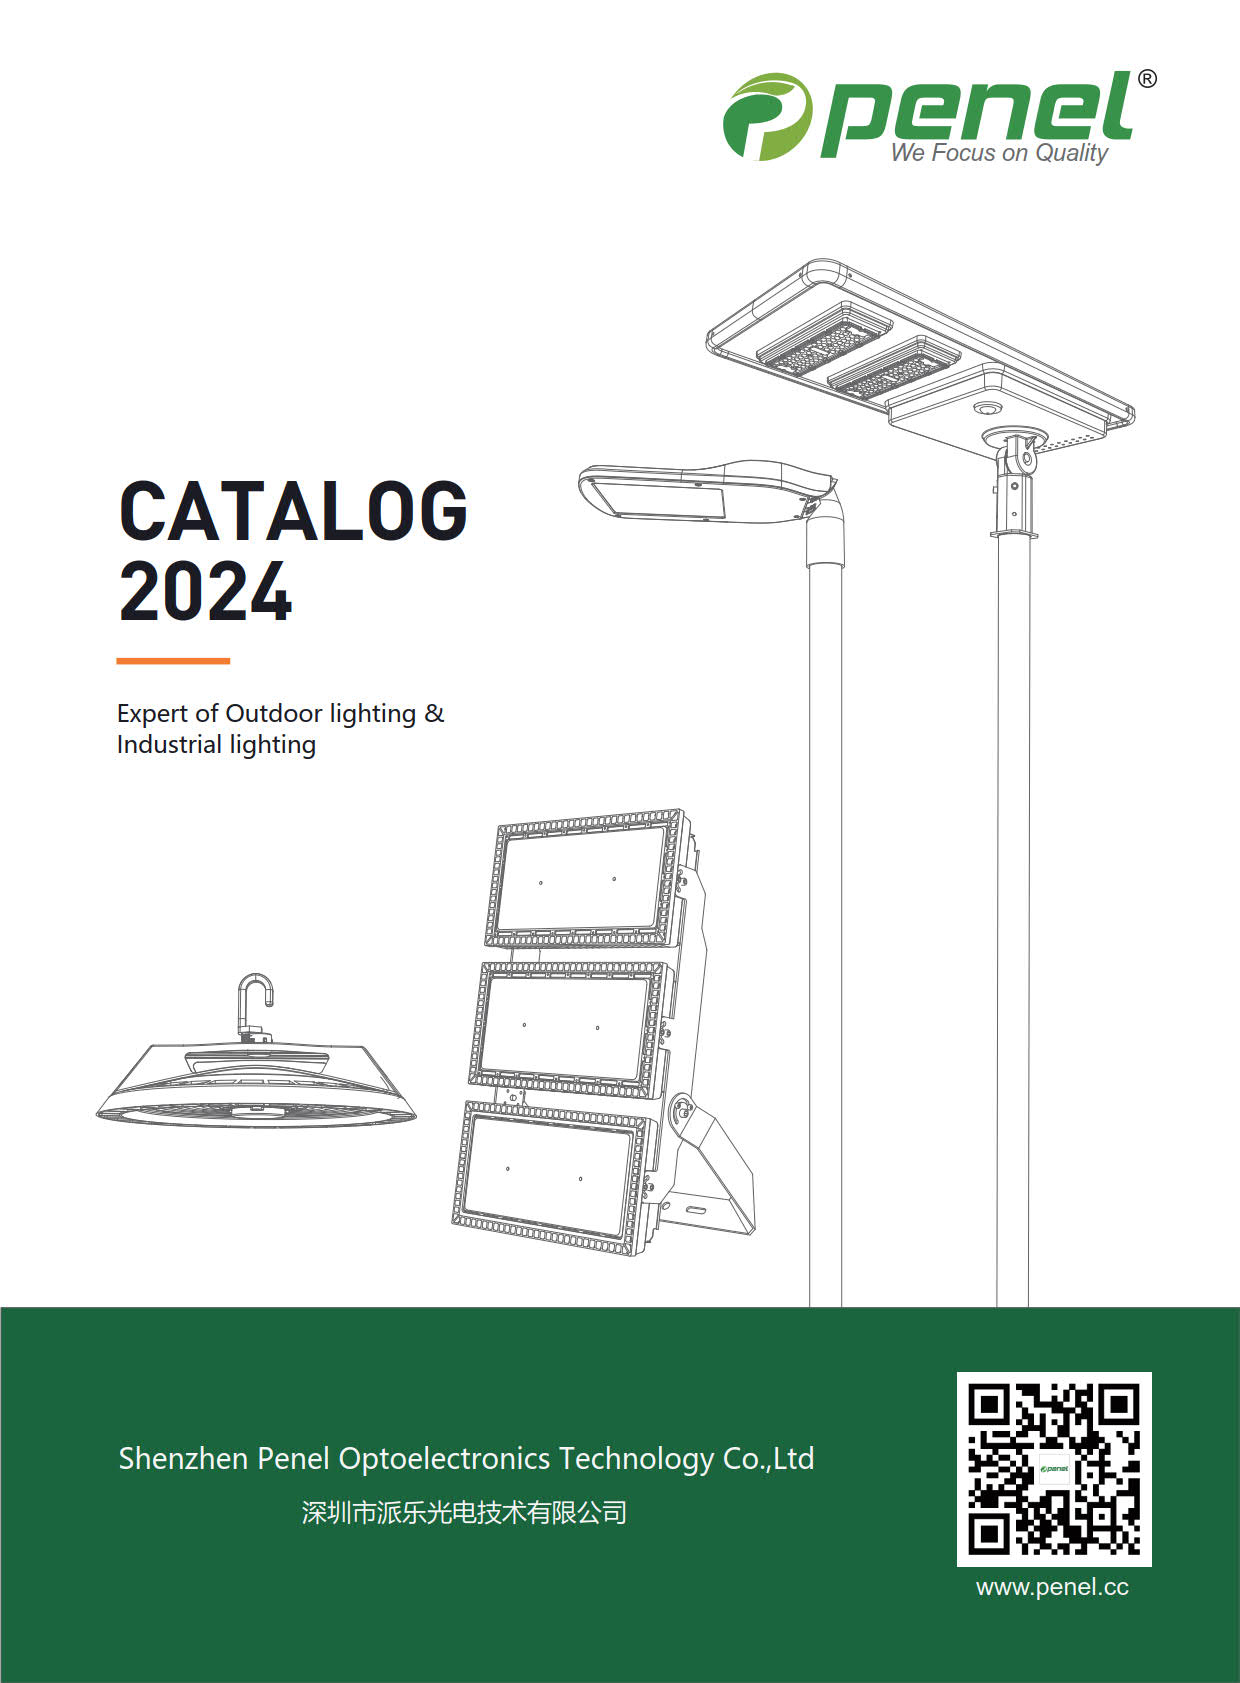 PENEL Catalogue 2024